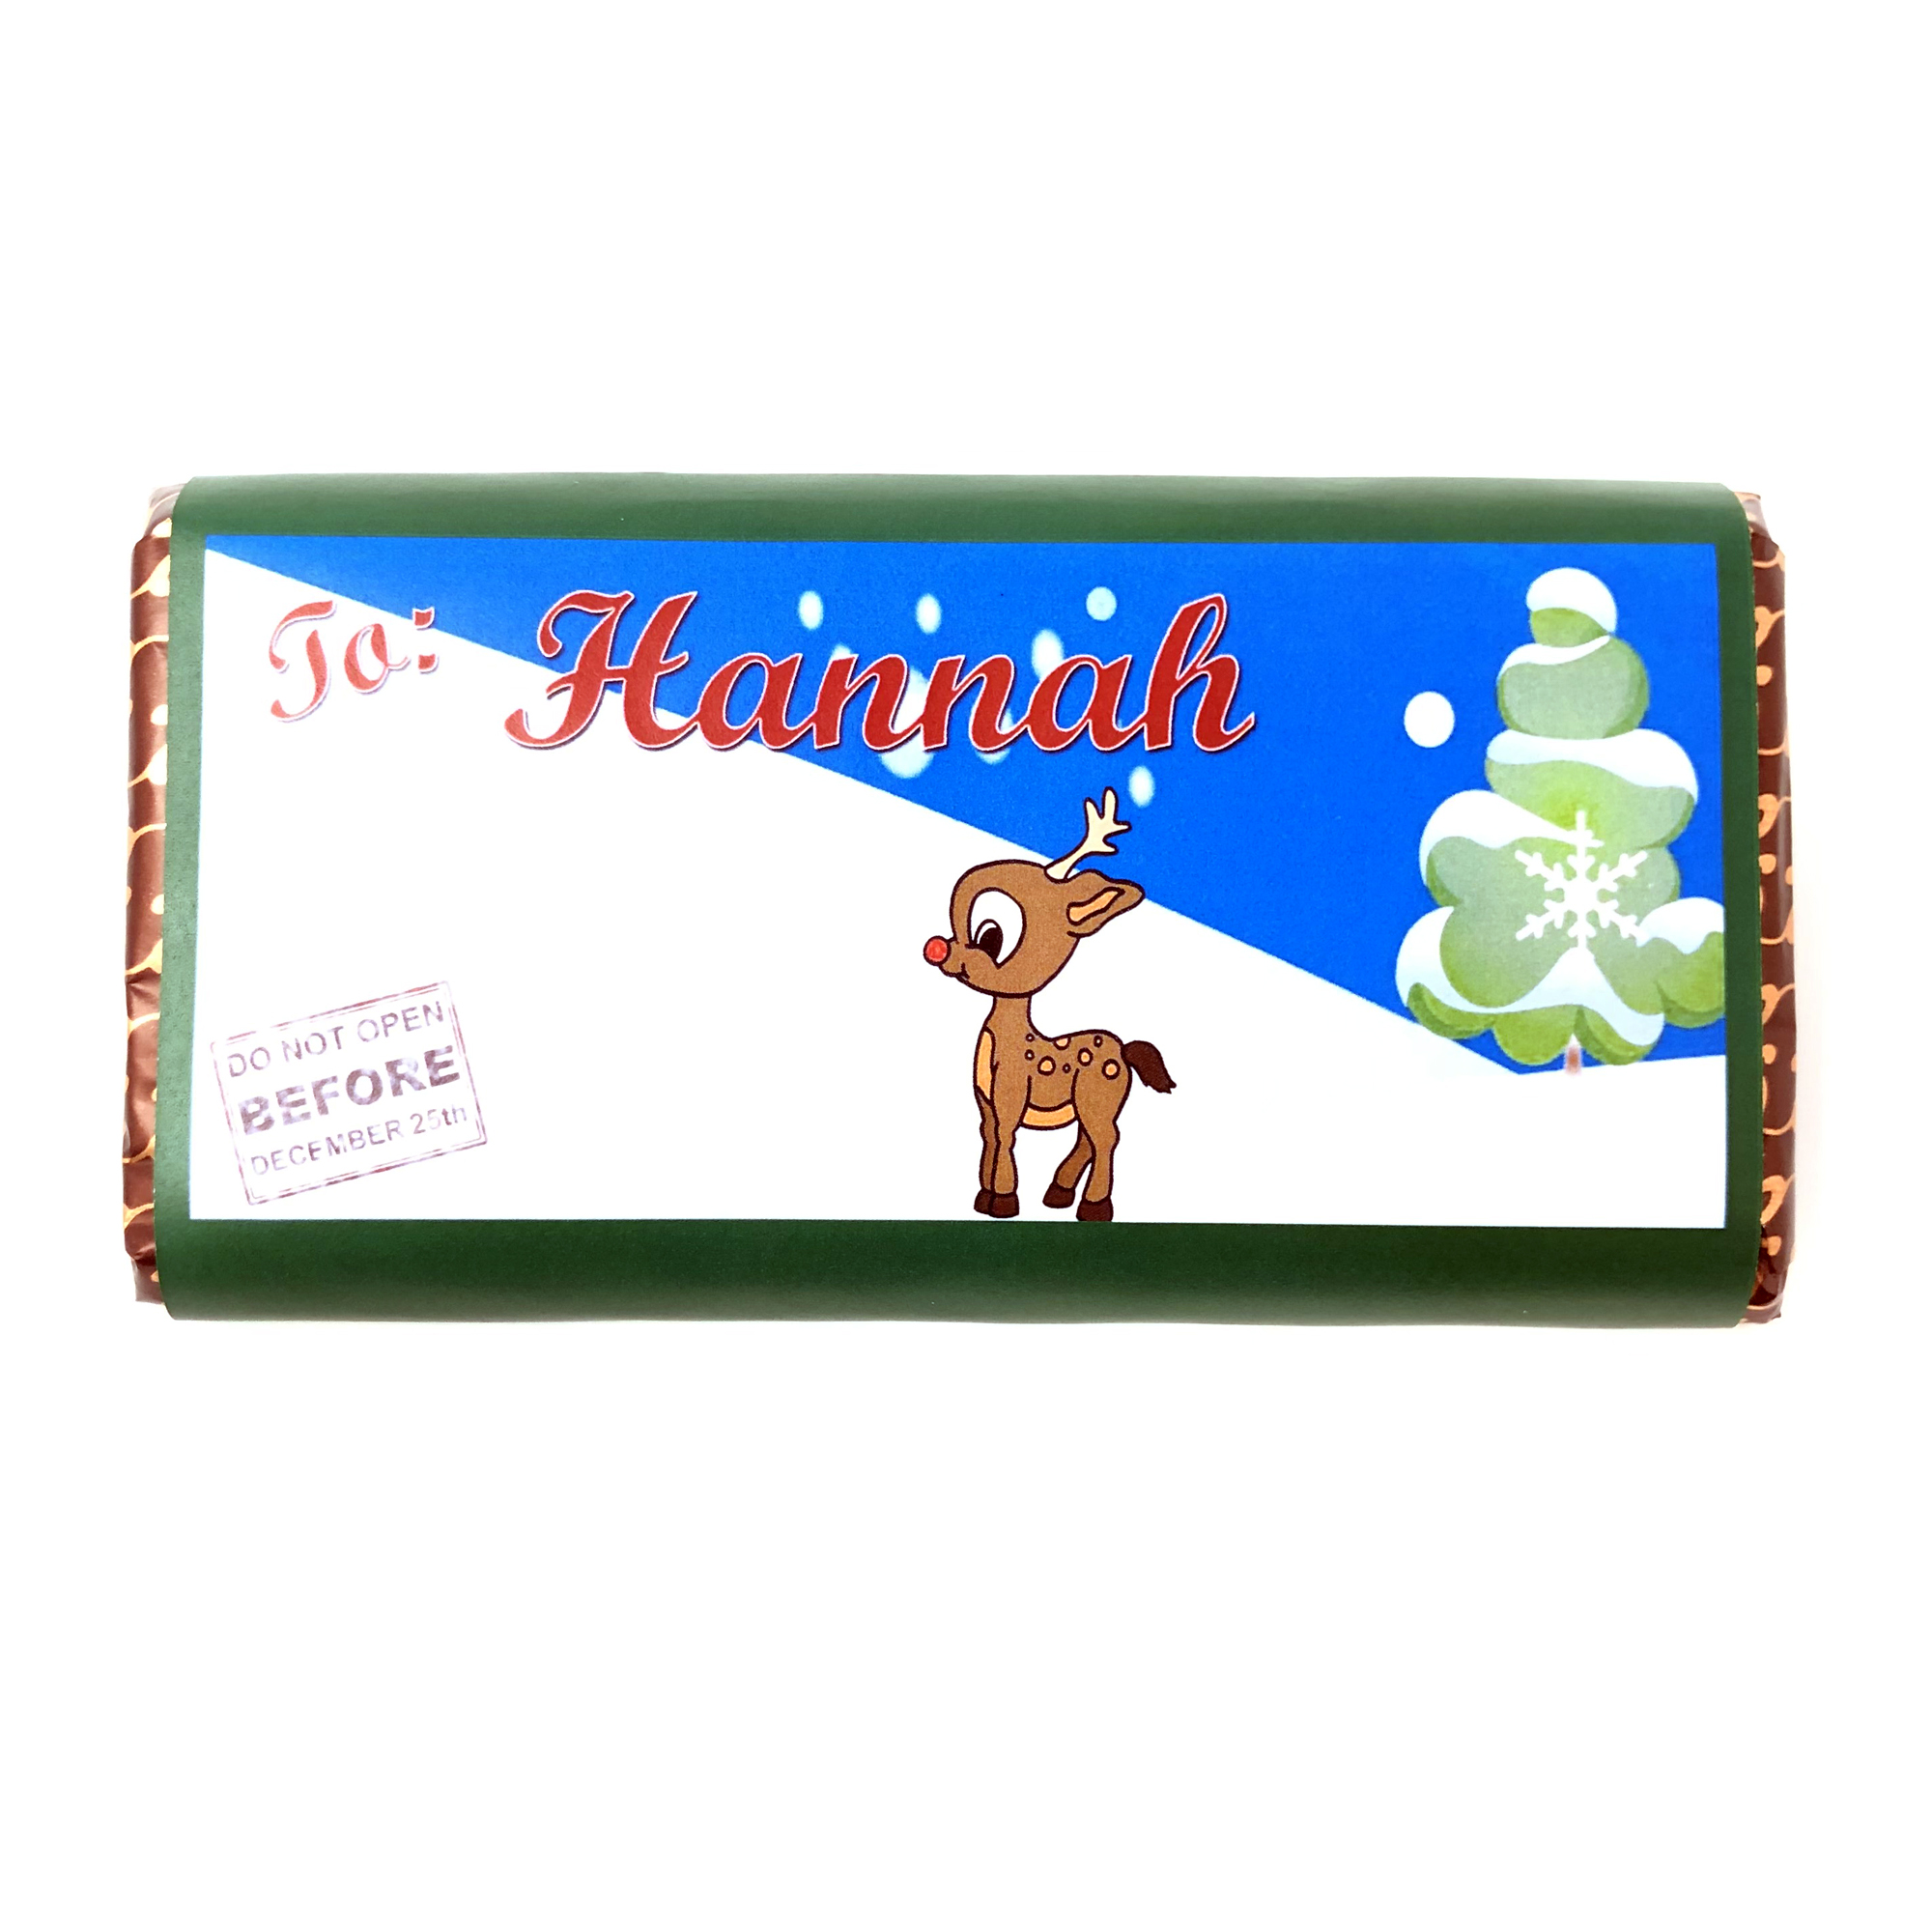 Personalised Christmas Chocolate Bar